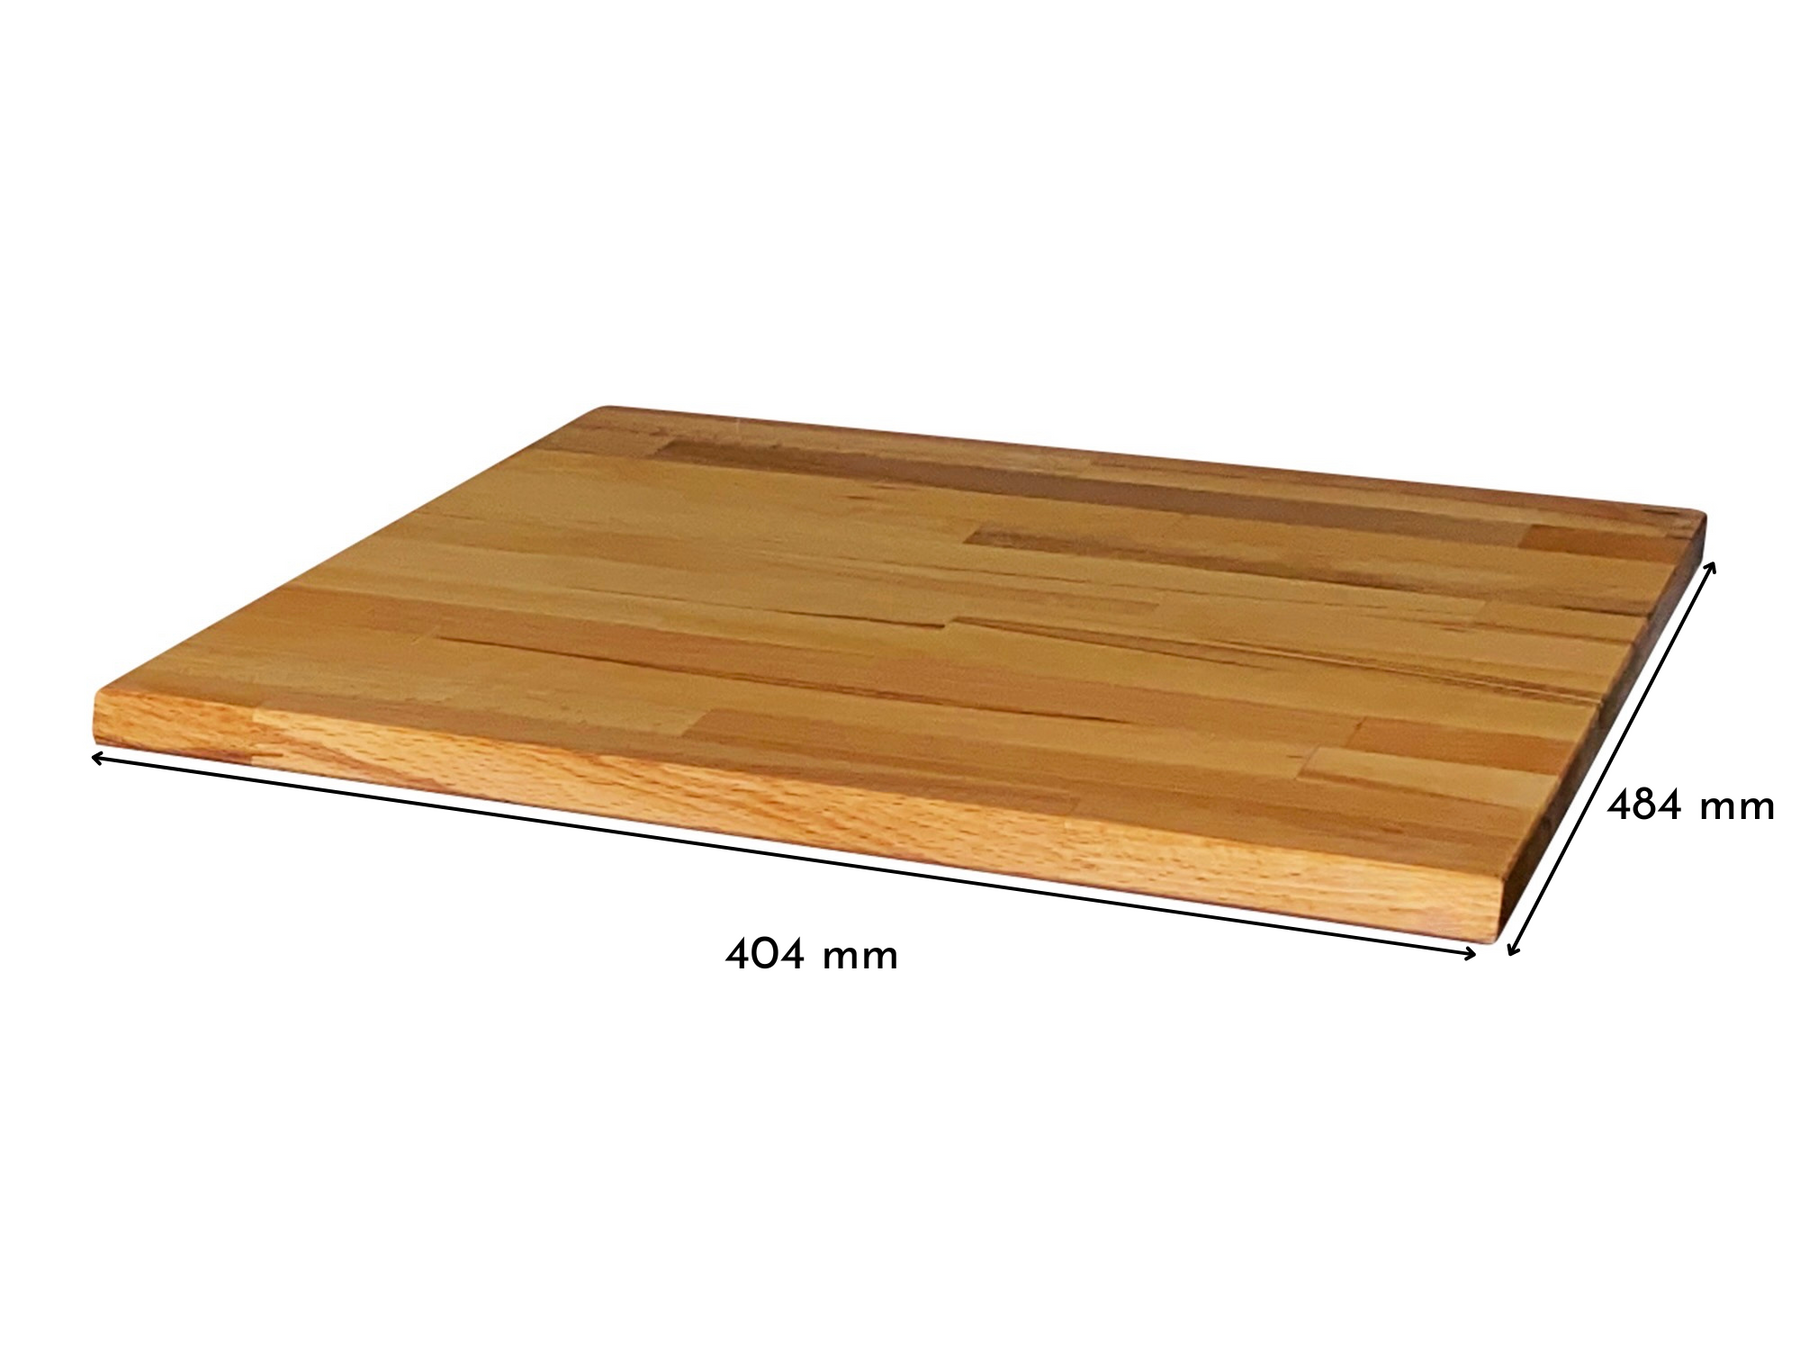 Malm Nachttisch mit Massivholzdeckplatte in Kernbuche Natur geölt in 19 mm Stärke mit Bemaßung 404 mm x 484 mm